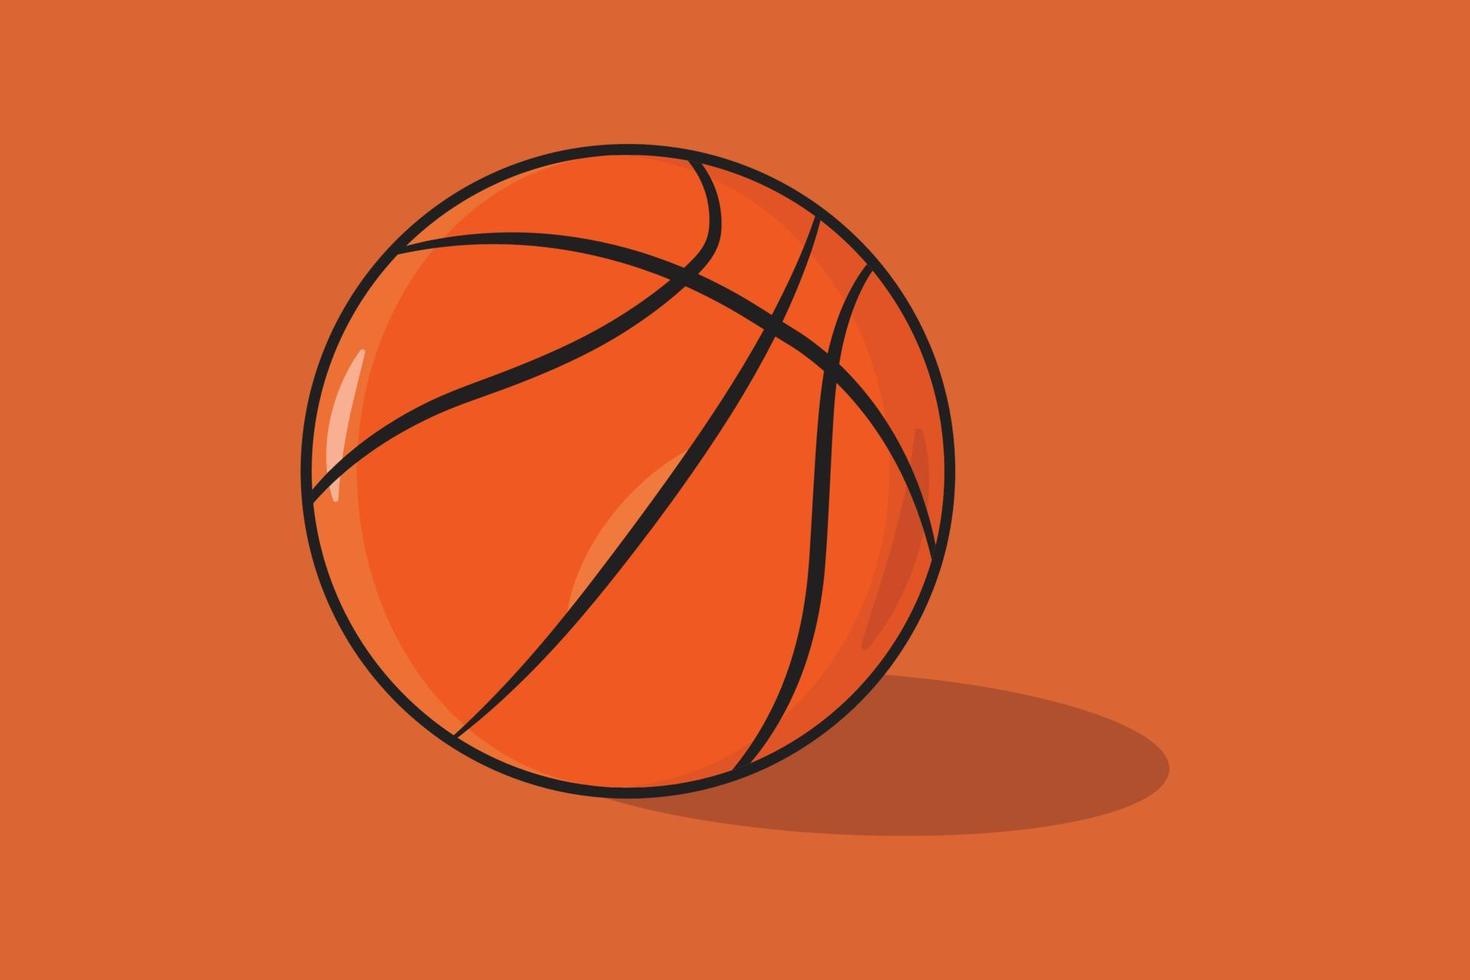 Basketball ball cartoon vector illustration basketball logo flat icon outline